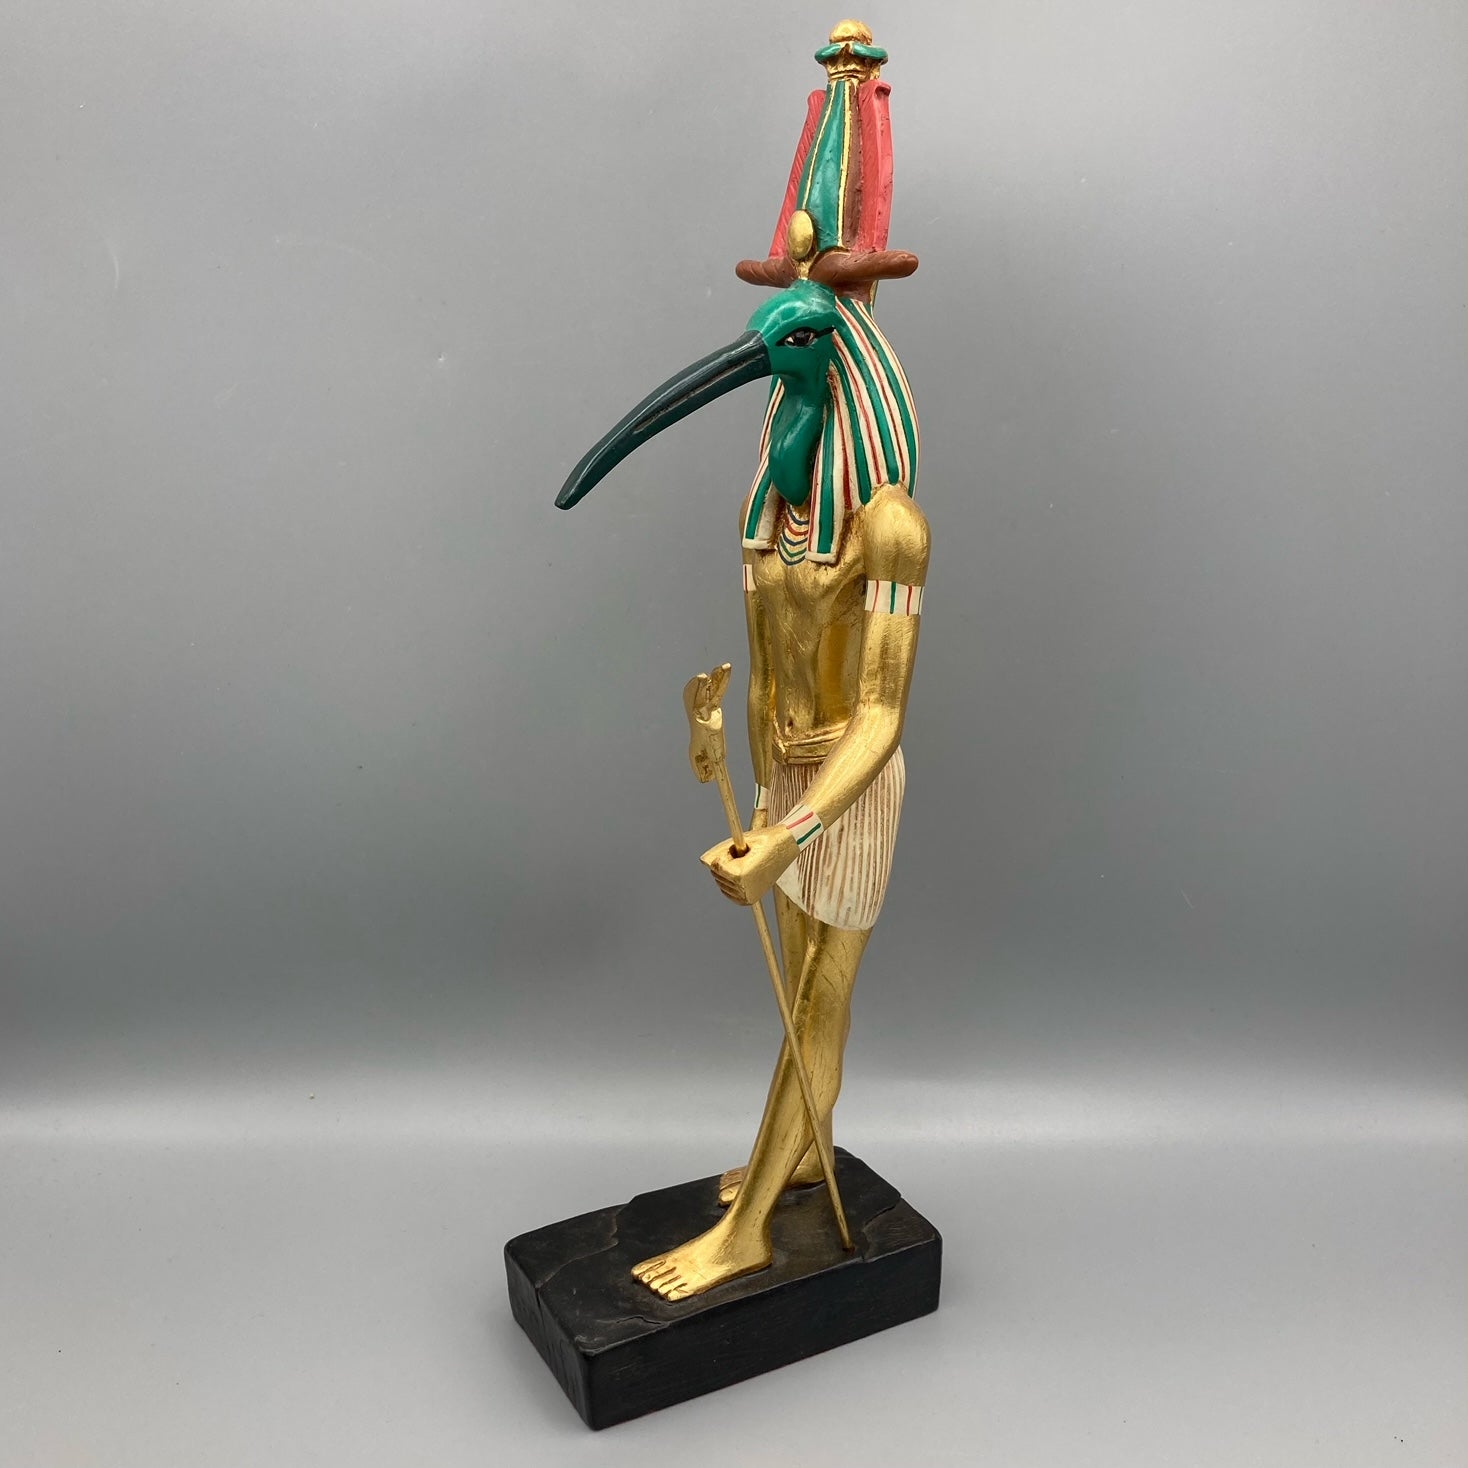 AGI Artisans Guild International Thoth Statue égyptienne 1988